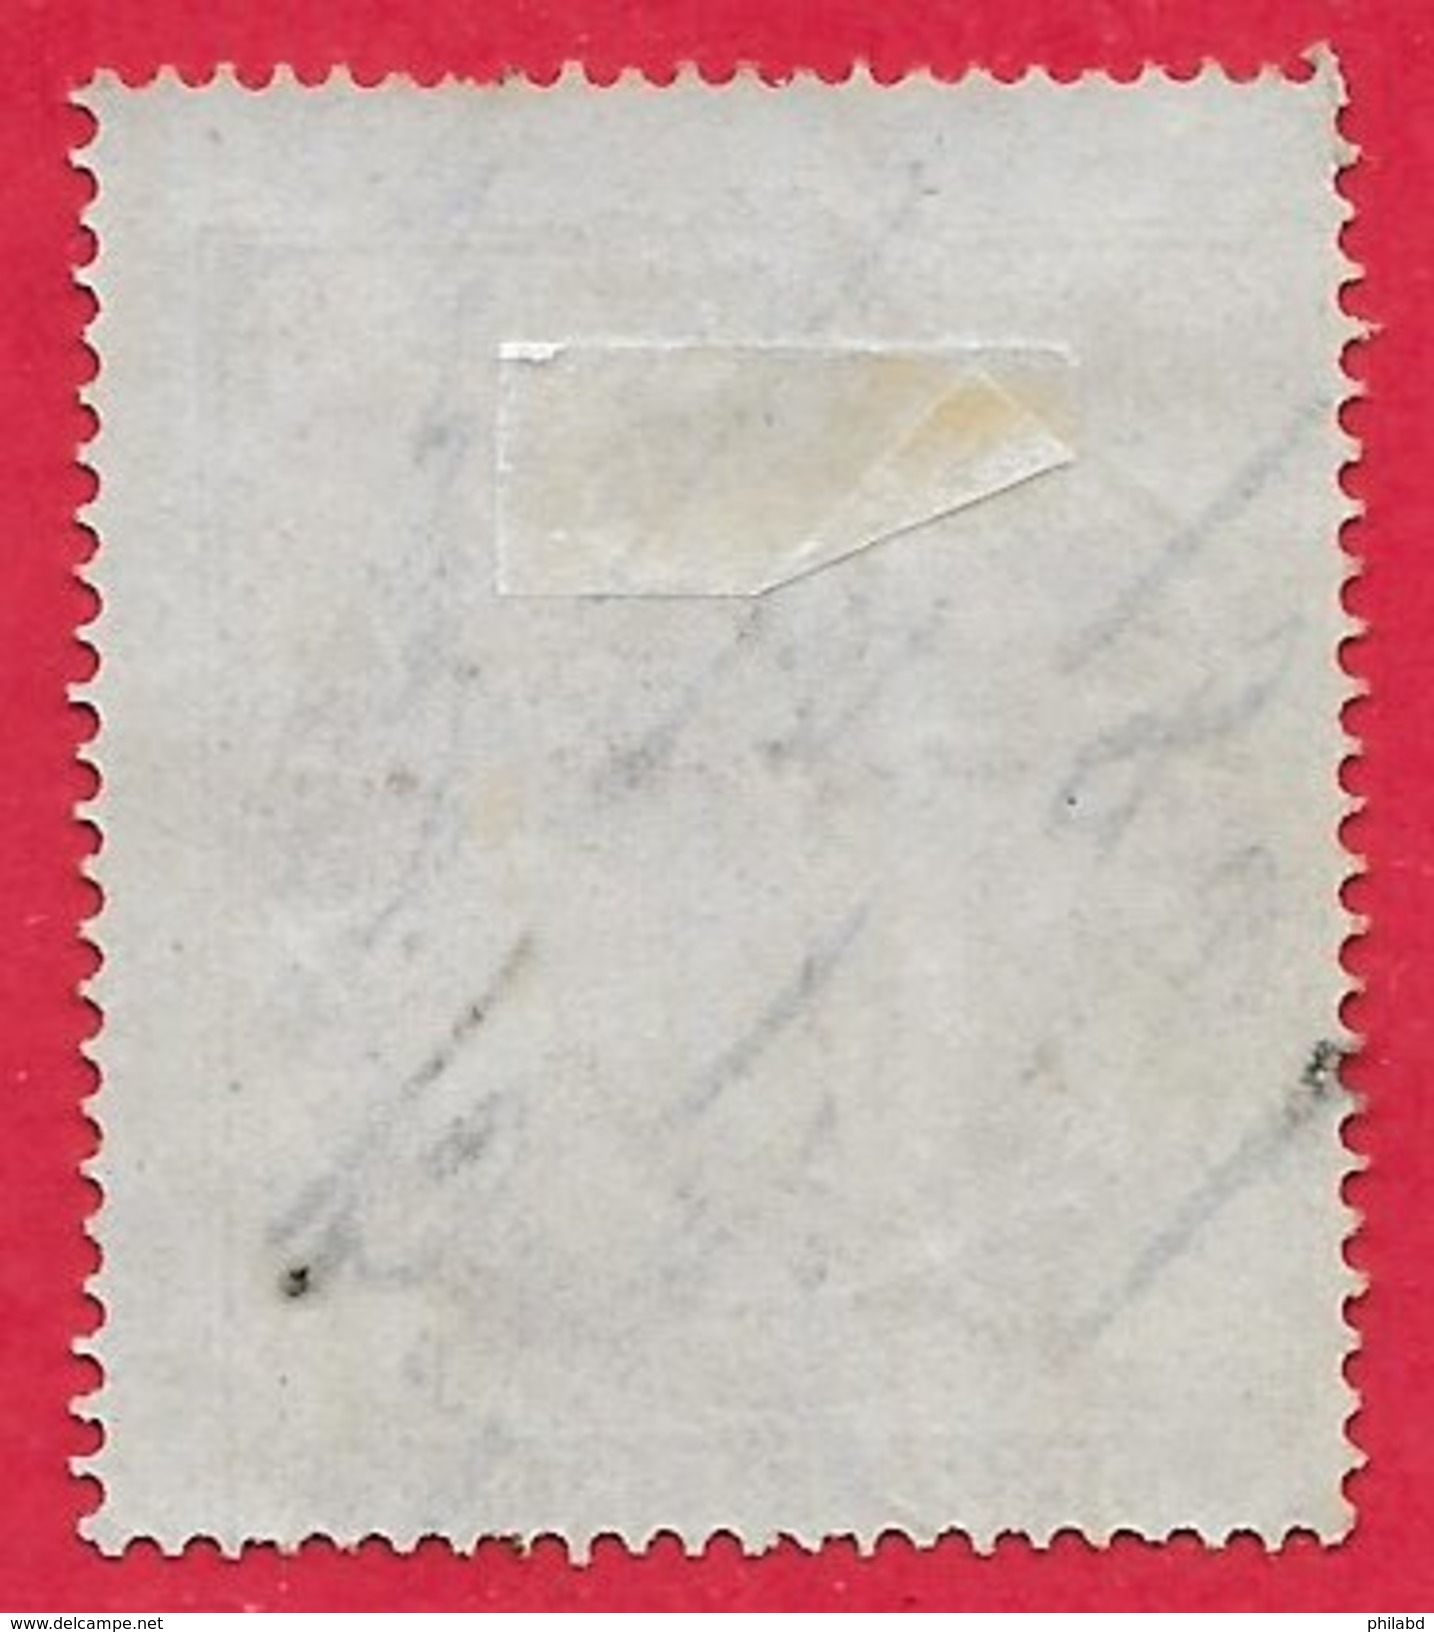 Grande-Bretagne Fiscal-postal N°1 1p Violet (filigrane Ancre) 1862 O - Revenue Stamps